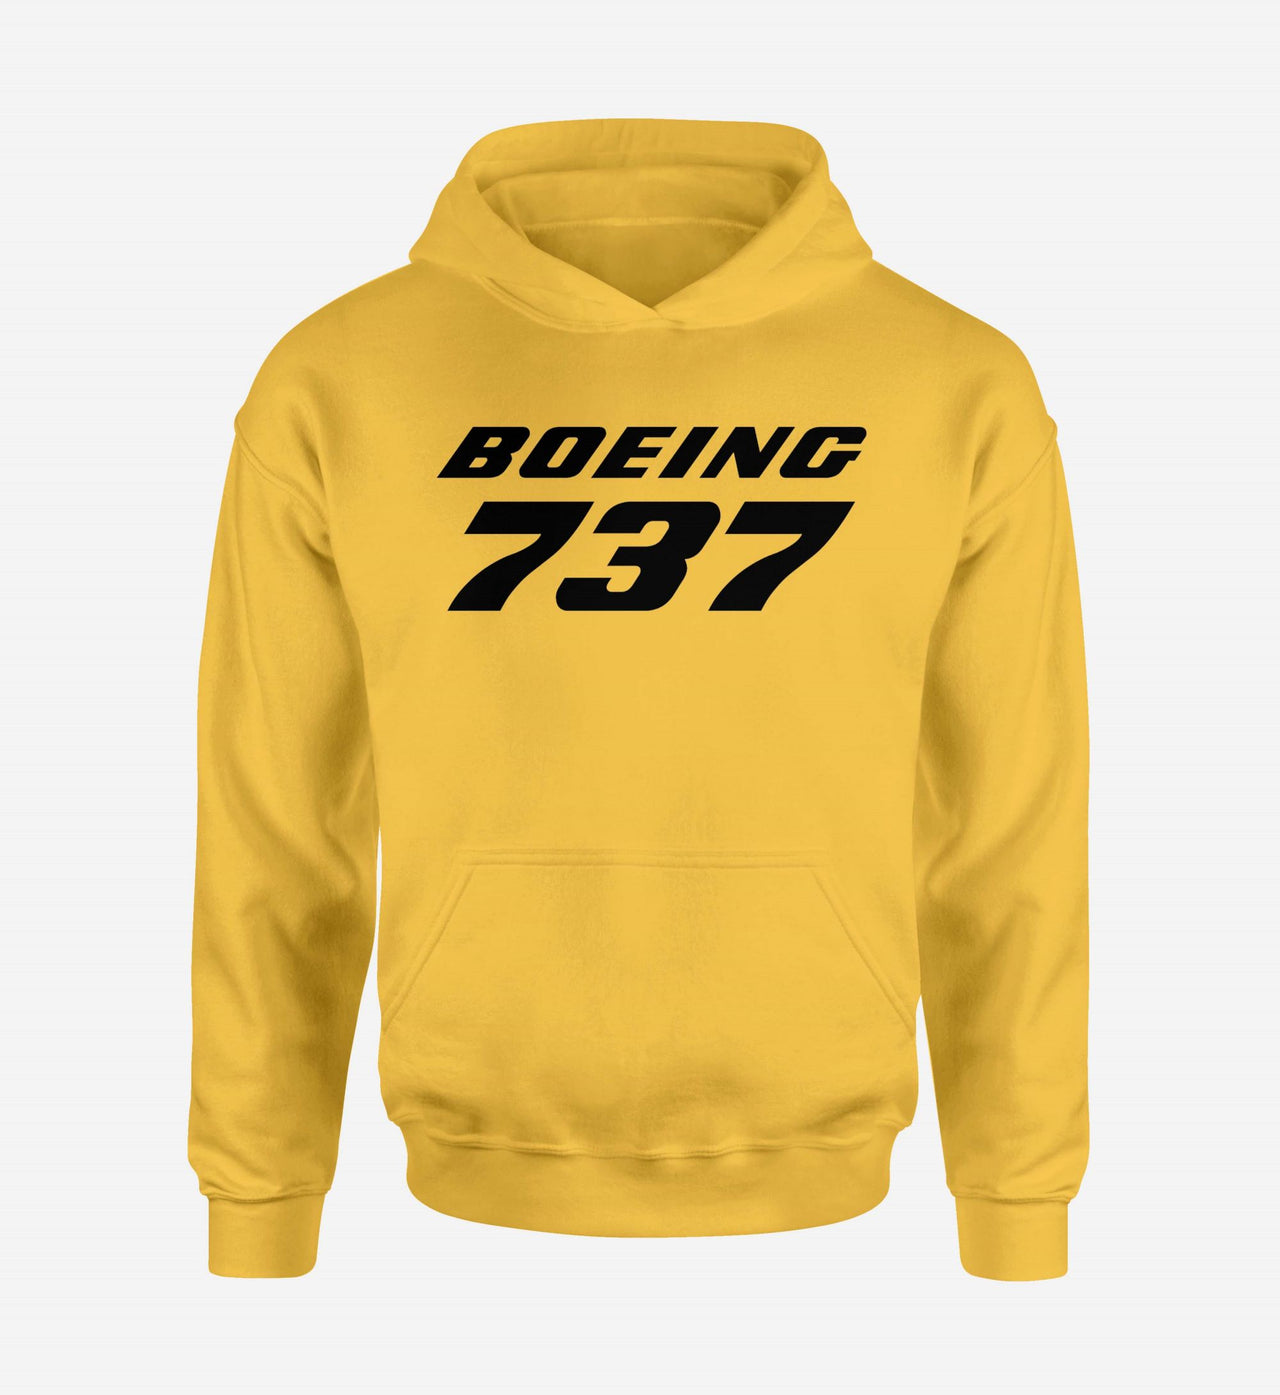 Boeing 737 & Text Designed Hoodies